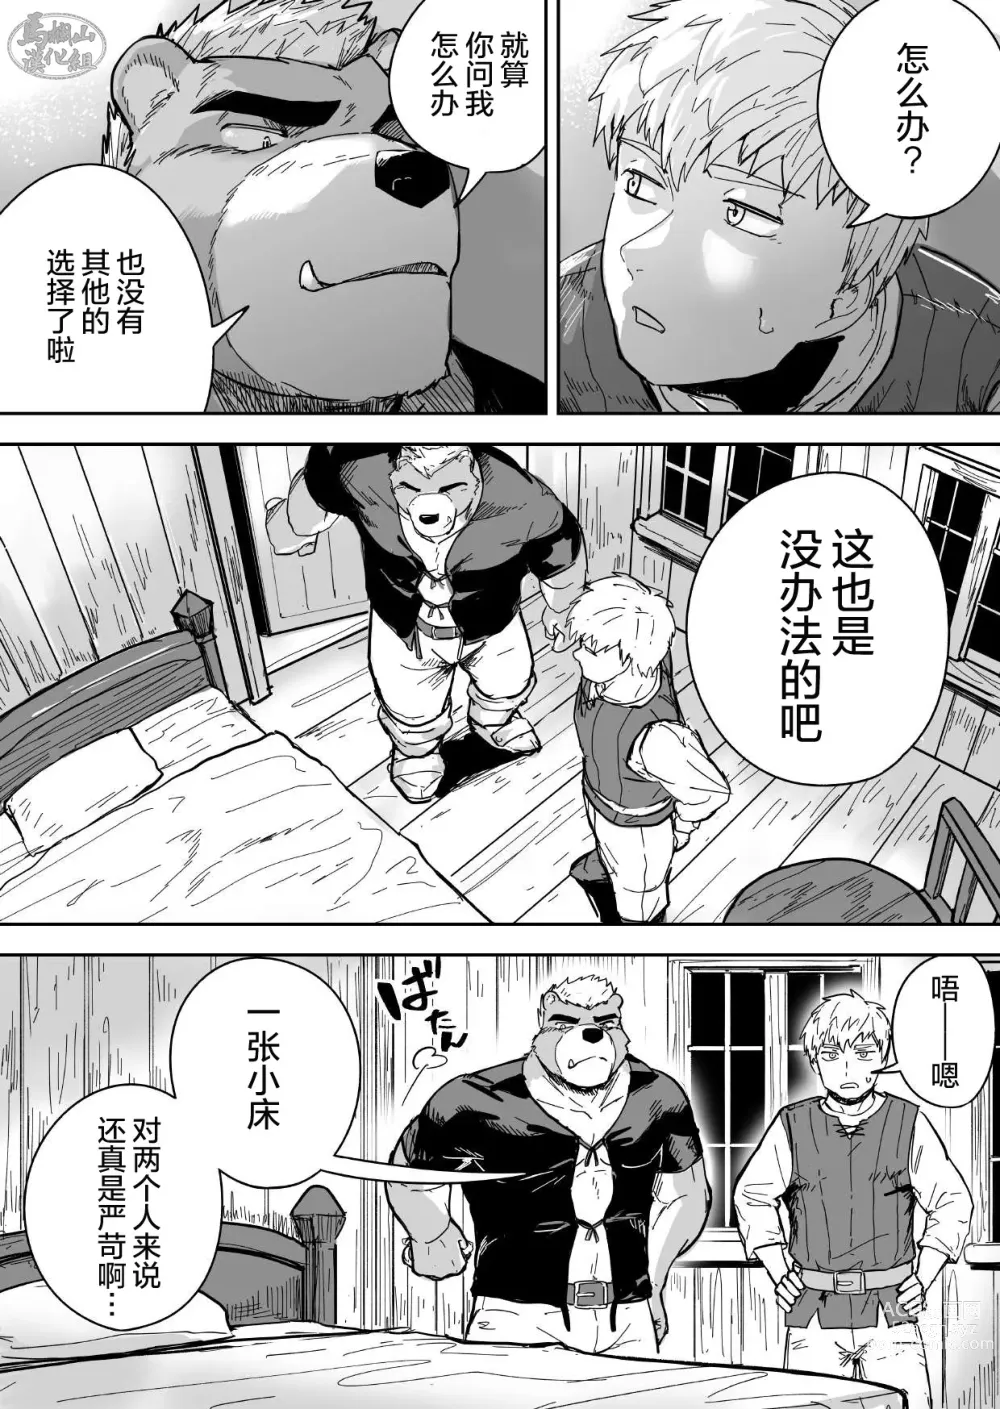 Page 4 of doujinshi Aibou Gachimuchi Kemonohito Senshi to Aibou Ijou ni Naru Hanashi｜ 当伙伴是强壮兽人战士之后和他超越友谊的故事